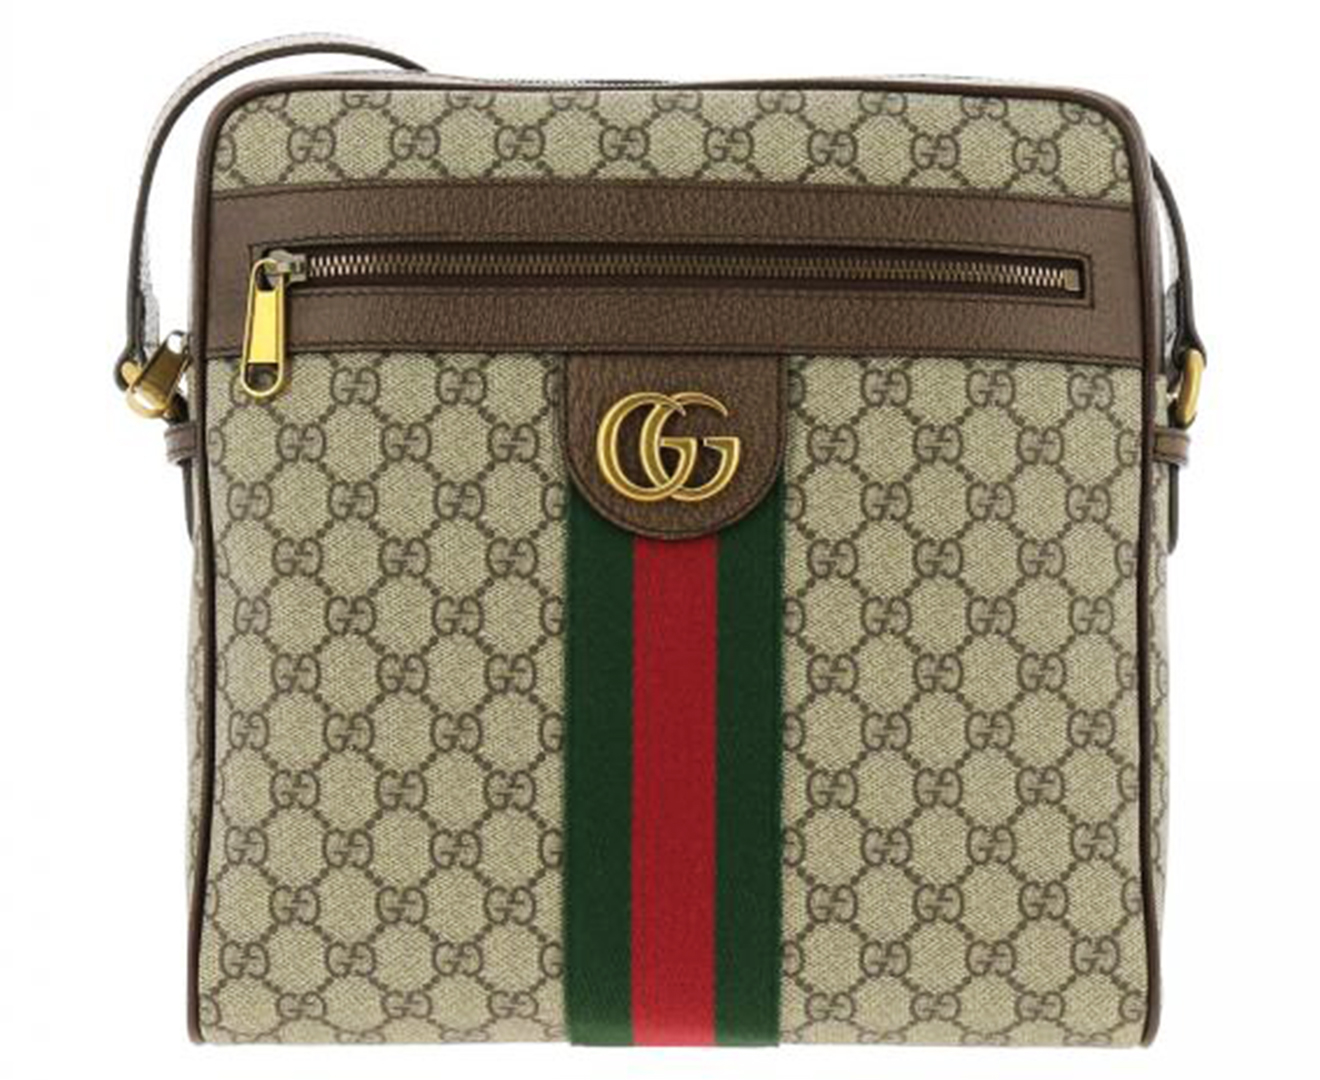 Gucci Ophidia GG Medium Messenger Bag - Beige/Ebony/Green/Red | Catch.co.nz